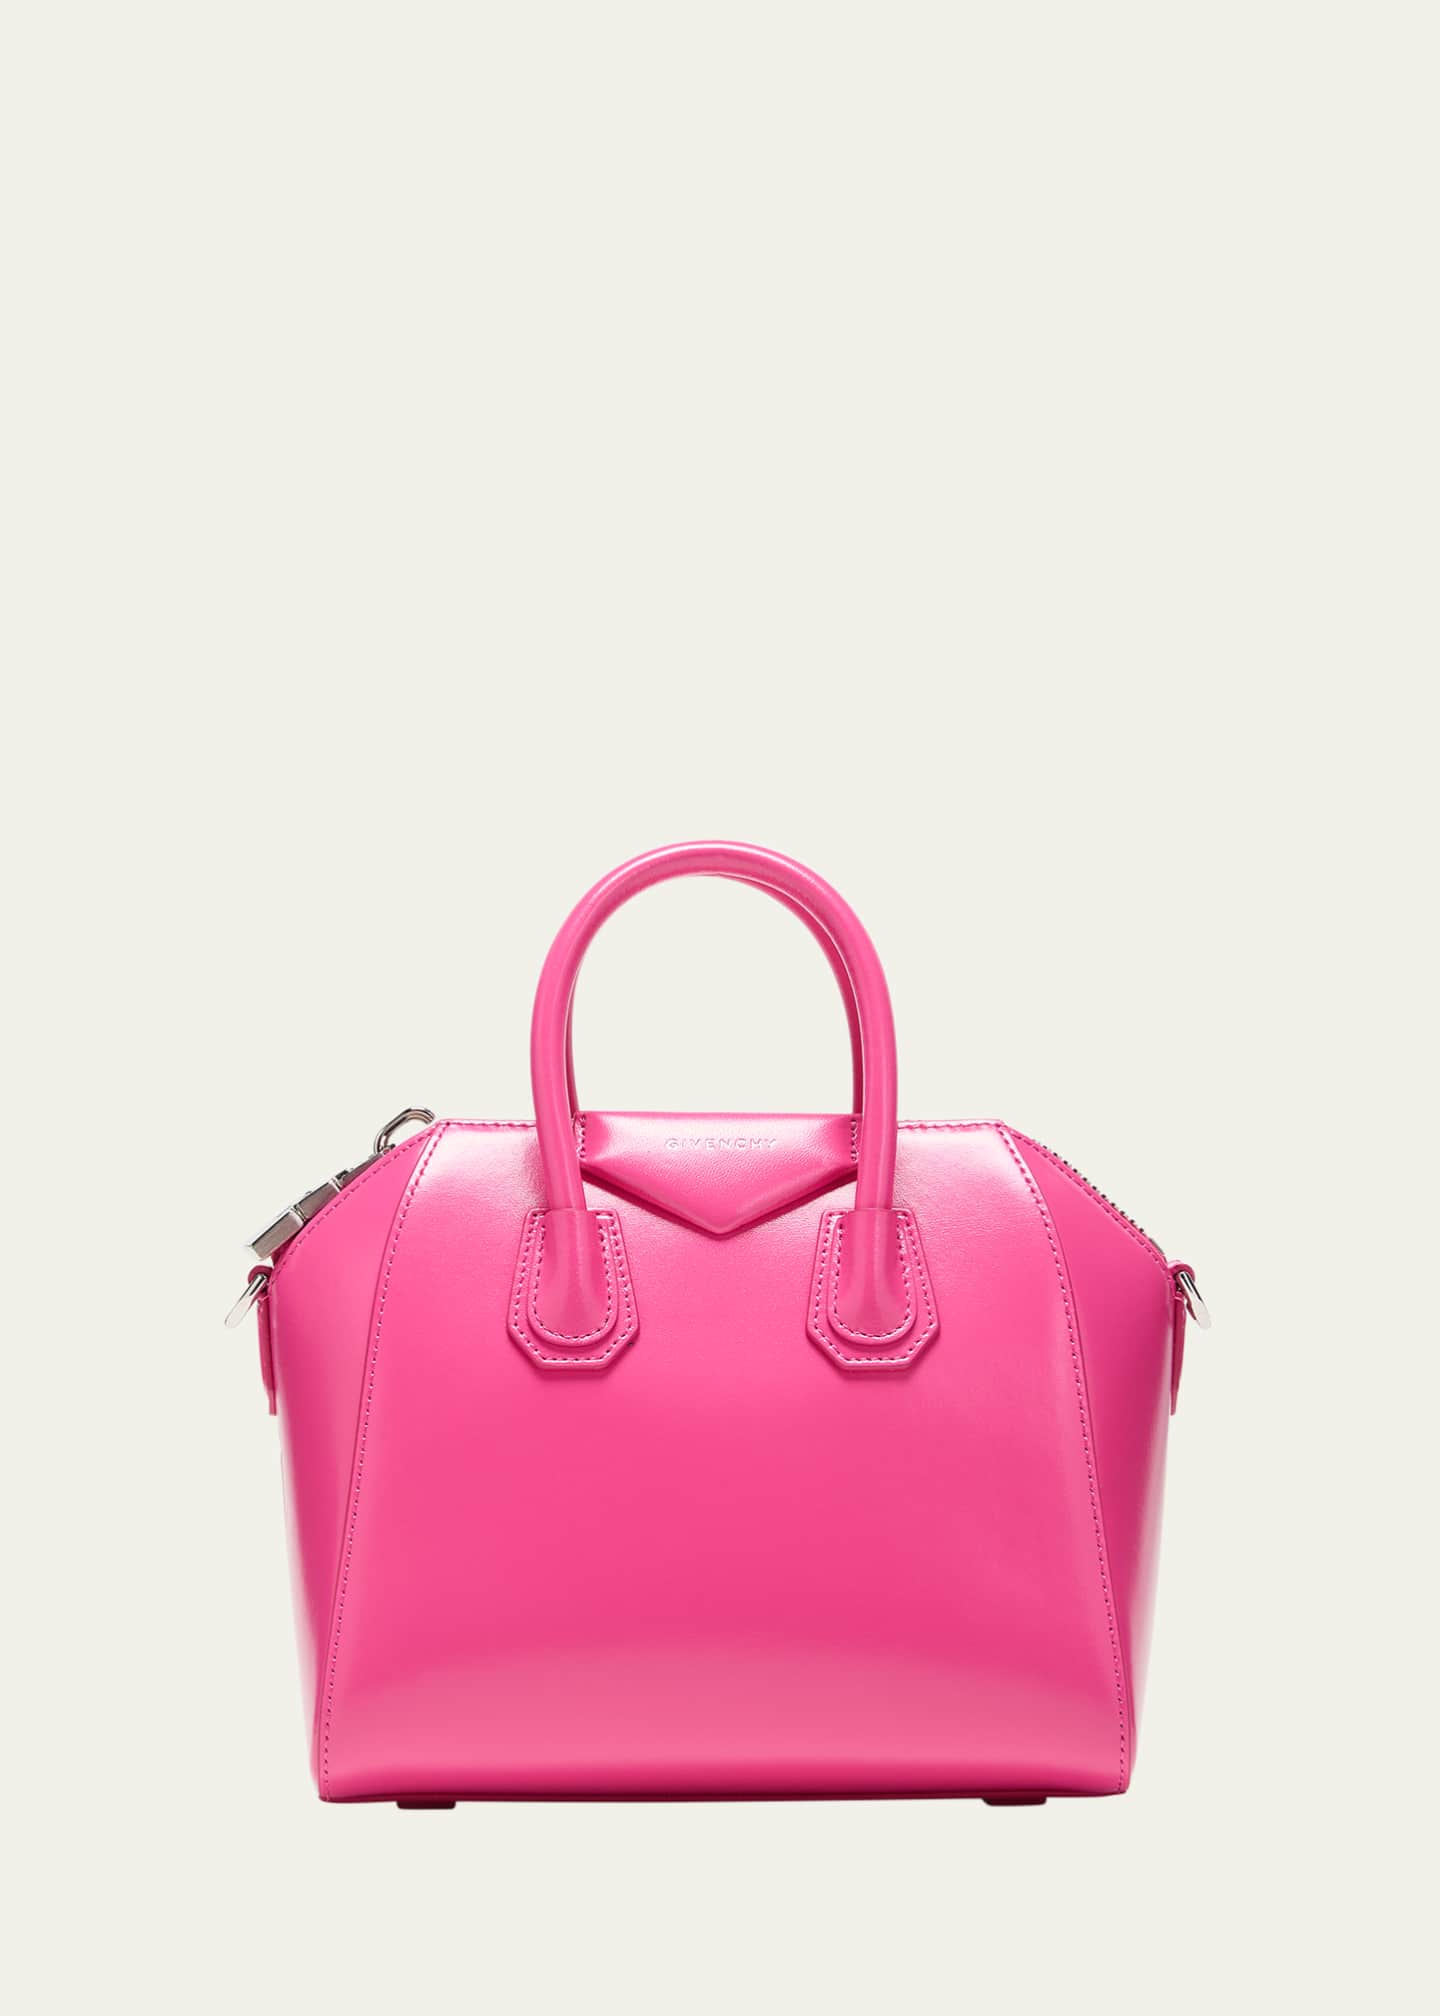 Shop Givenchy Mini Antigona Bag in Box Leather